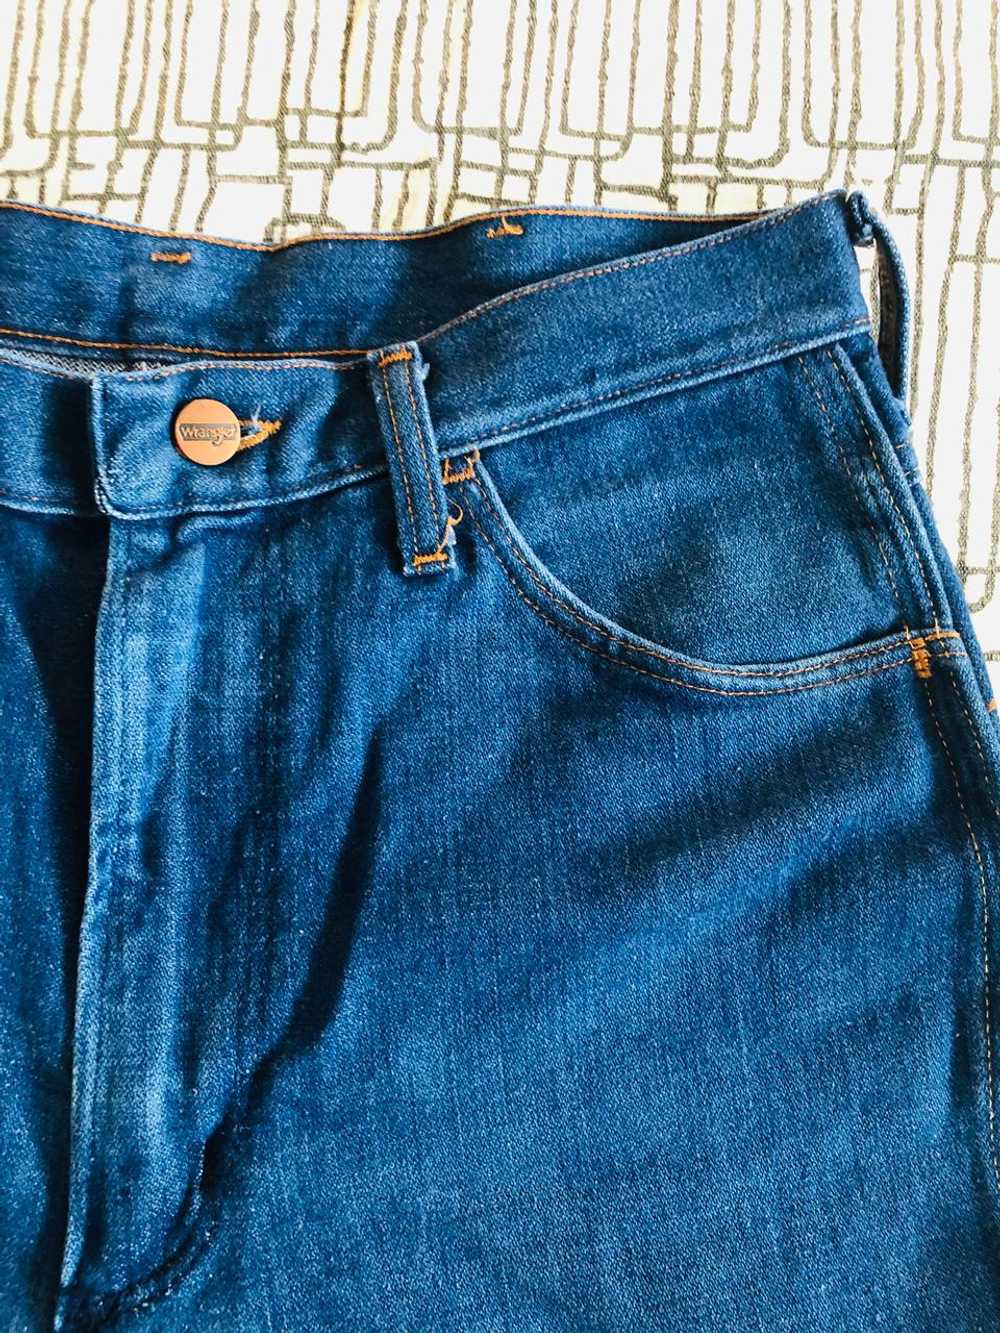 Wrangler High-Waisted Flared Jeans (32) - image 4